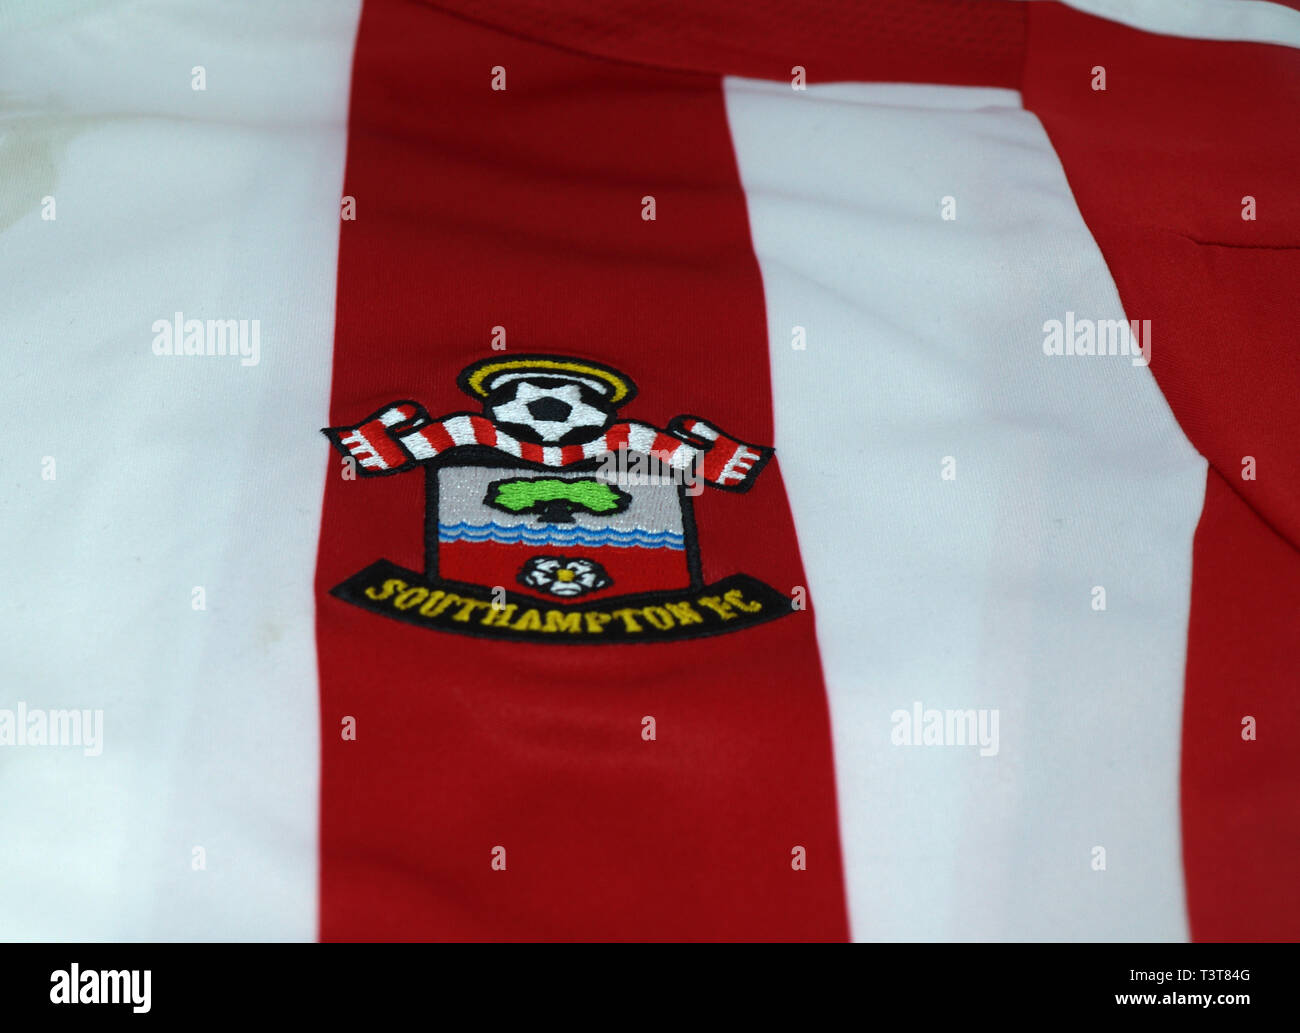 Southampton Football Club home shirt Stock Photo